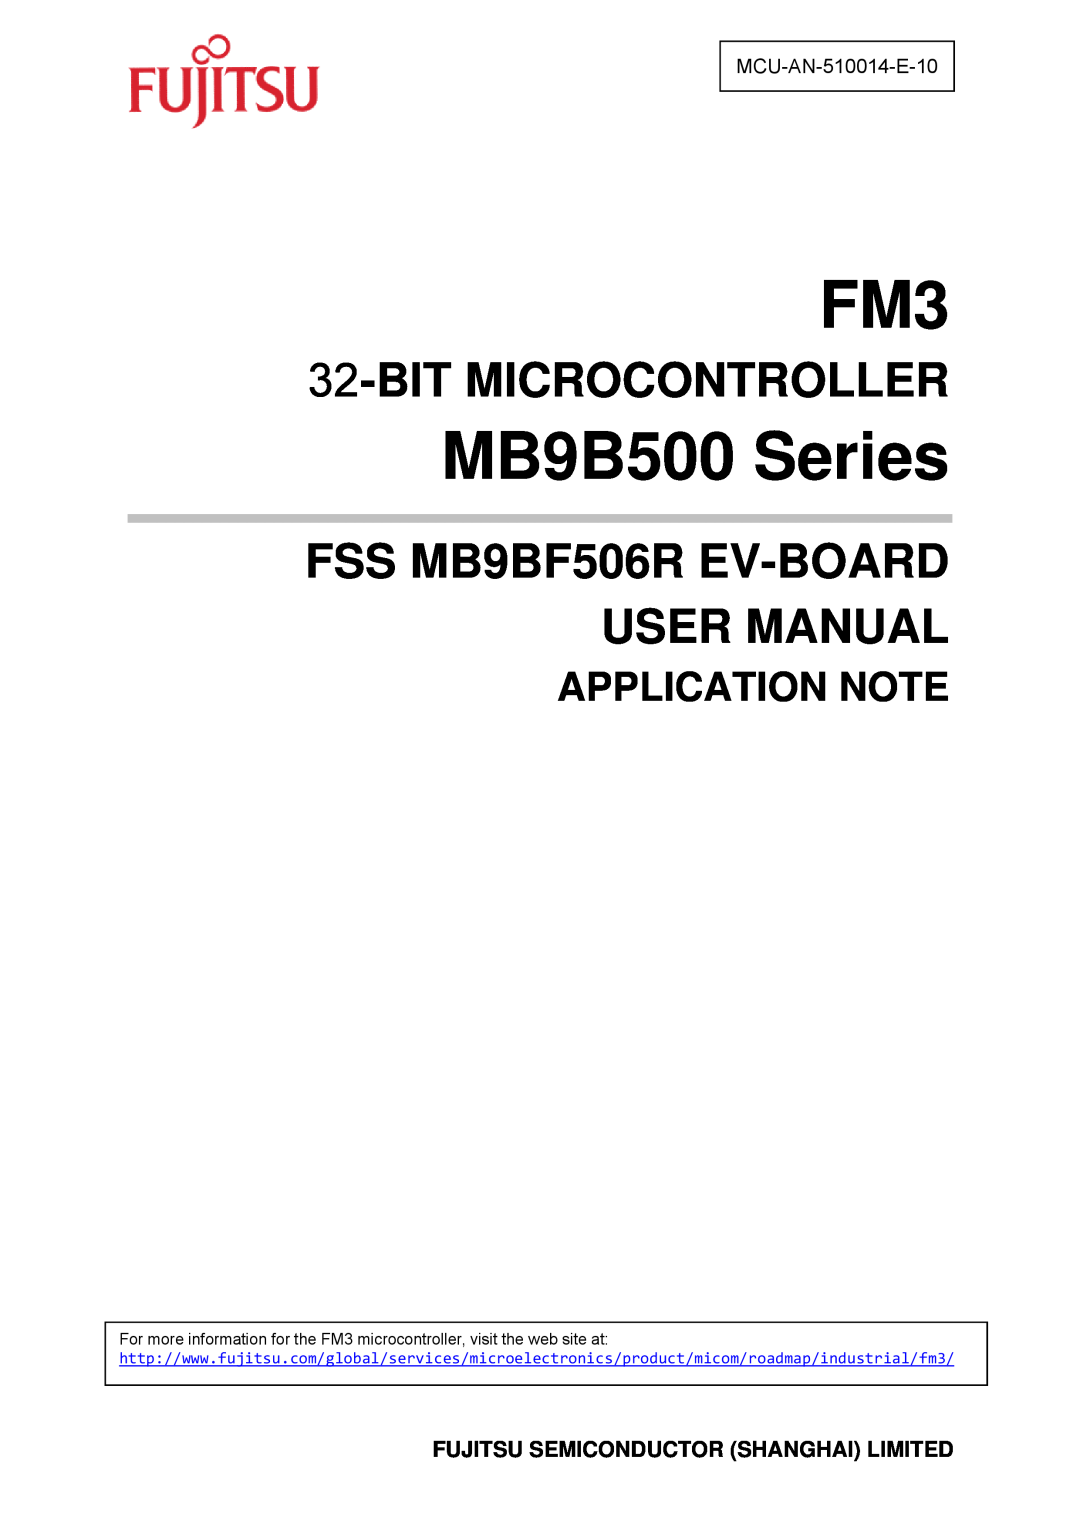 Fujitsu MB9B500 Series user manual Fujitsu Semiconductor Shanghai Limited, Bit Microcontroller, Application Note 